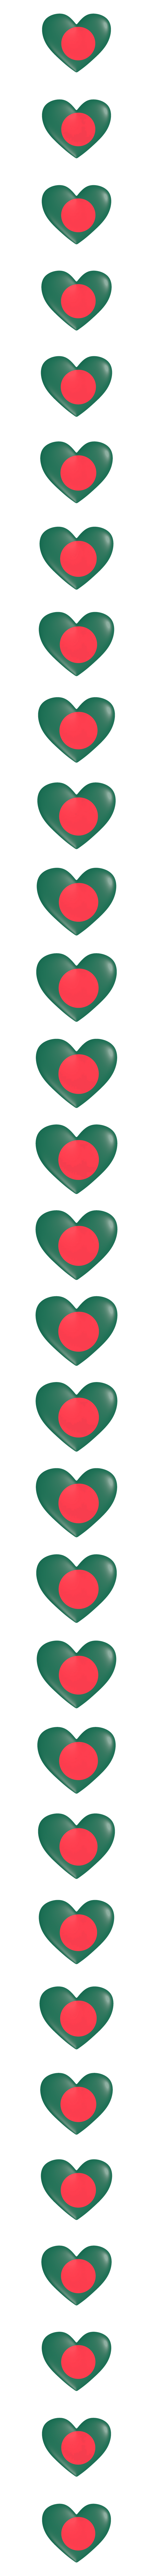 Bangladesh heart